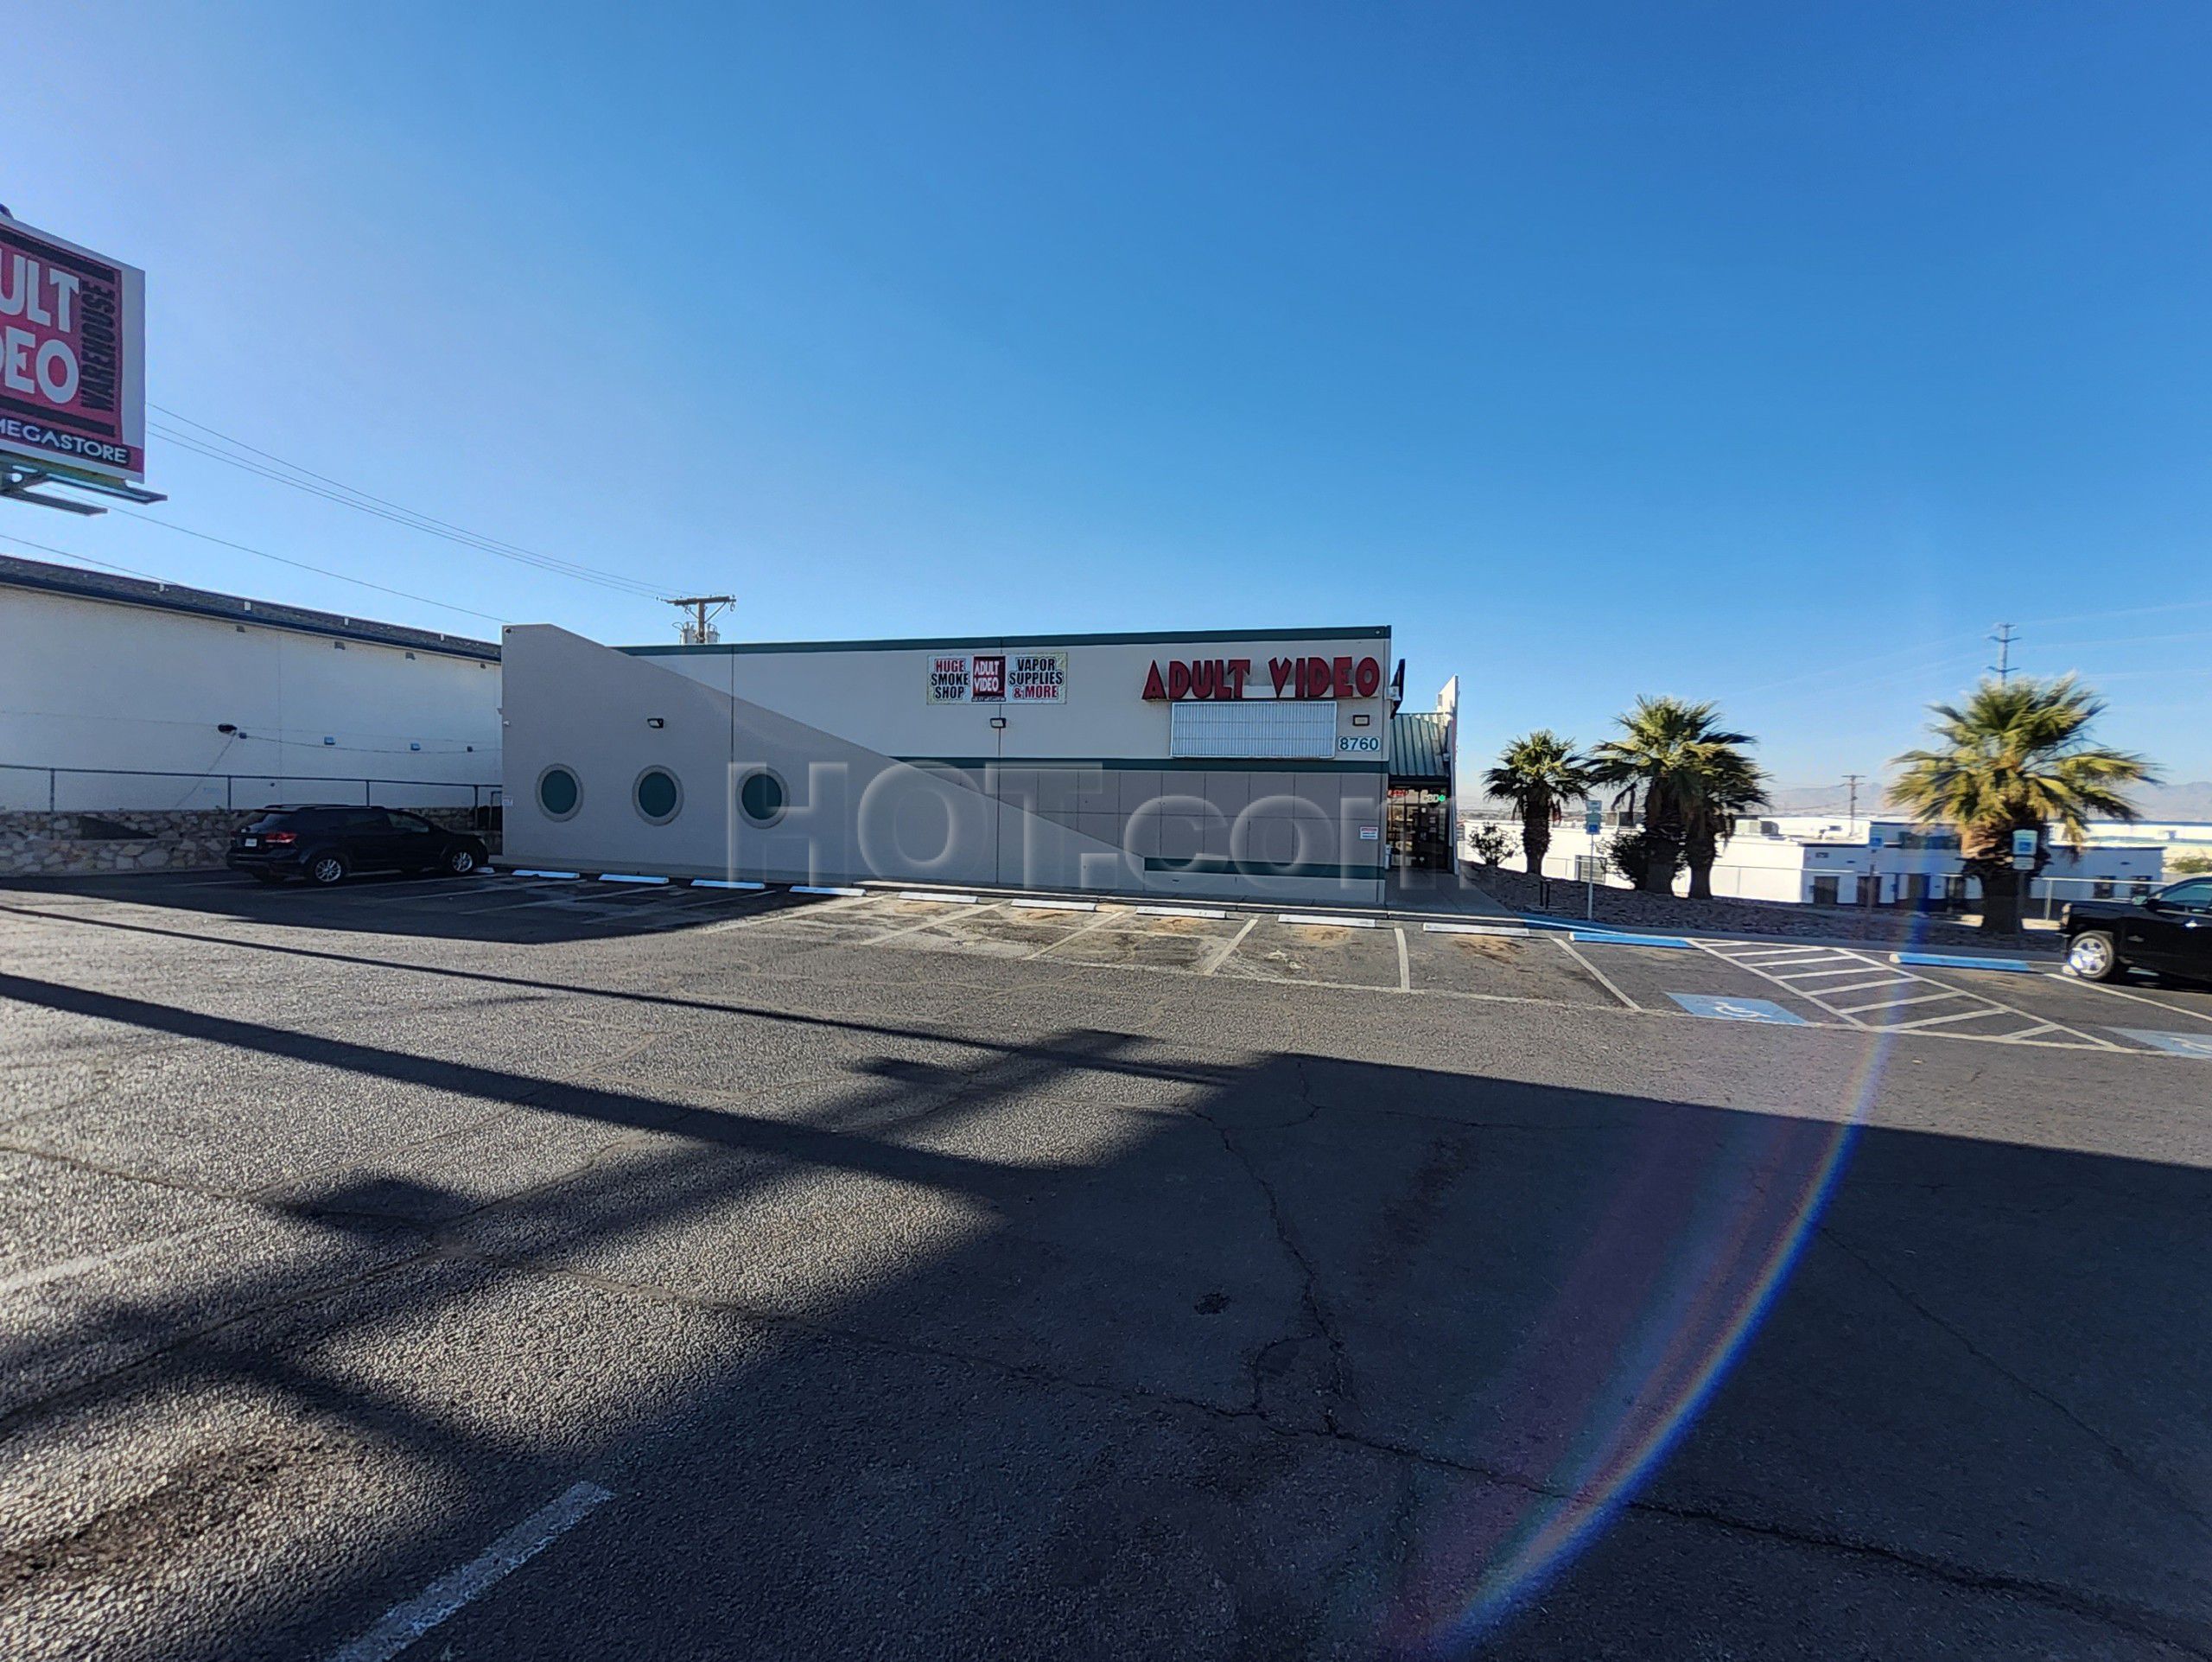 El Paso, Texas Adult Video Warehouse